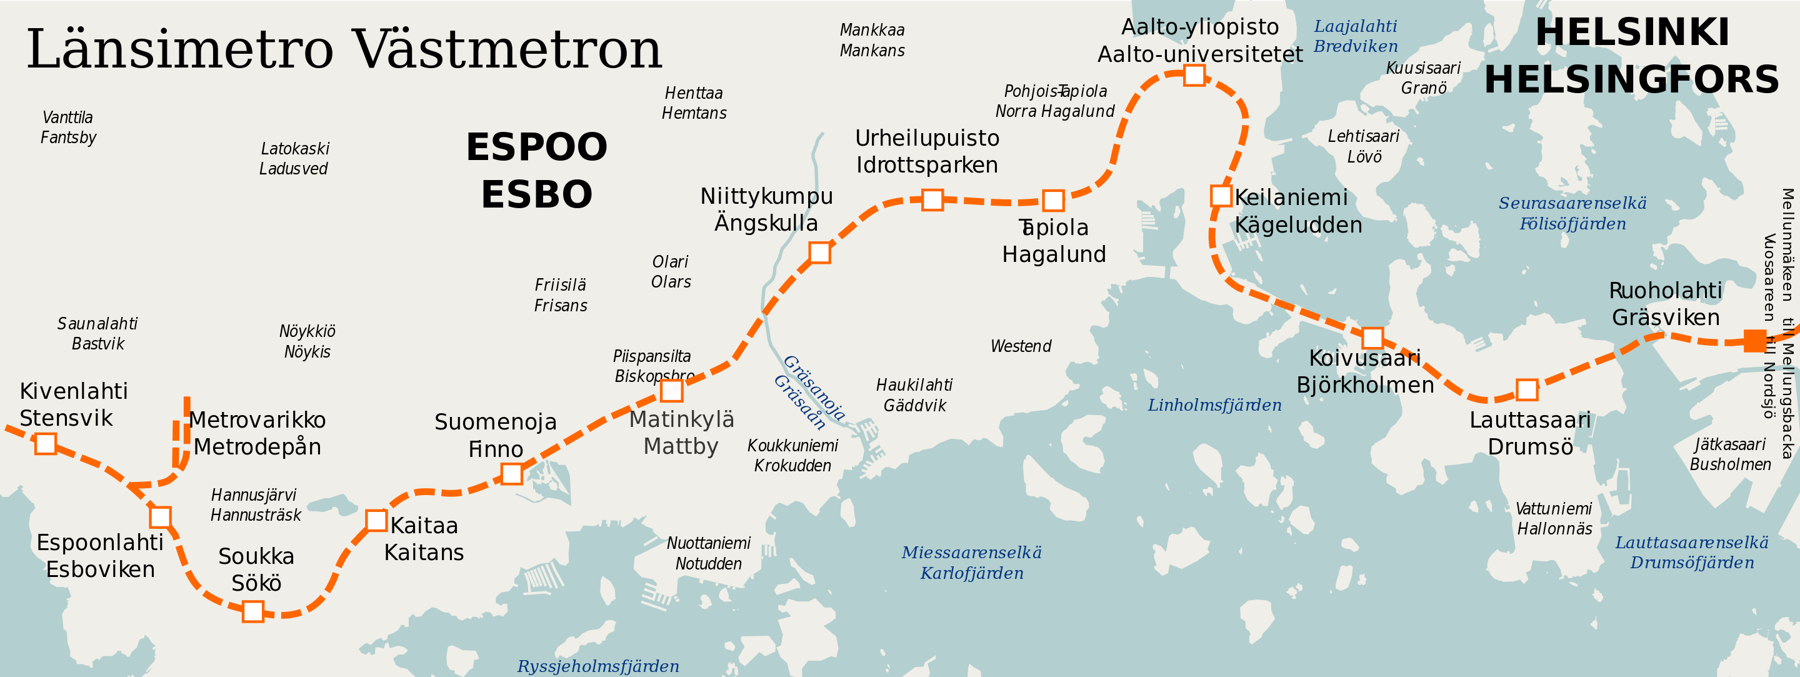 Western Metro scheme.  Source: Wikipedia